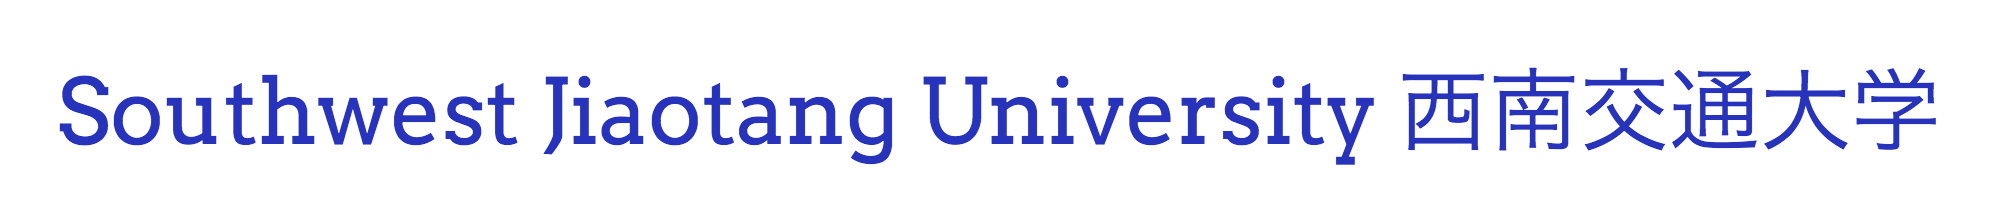 Southwest Jiaotang University 西南交通大学-logo(1).png